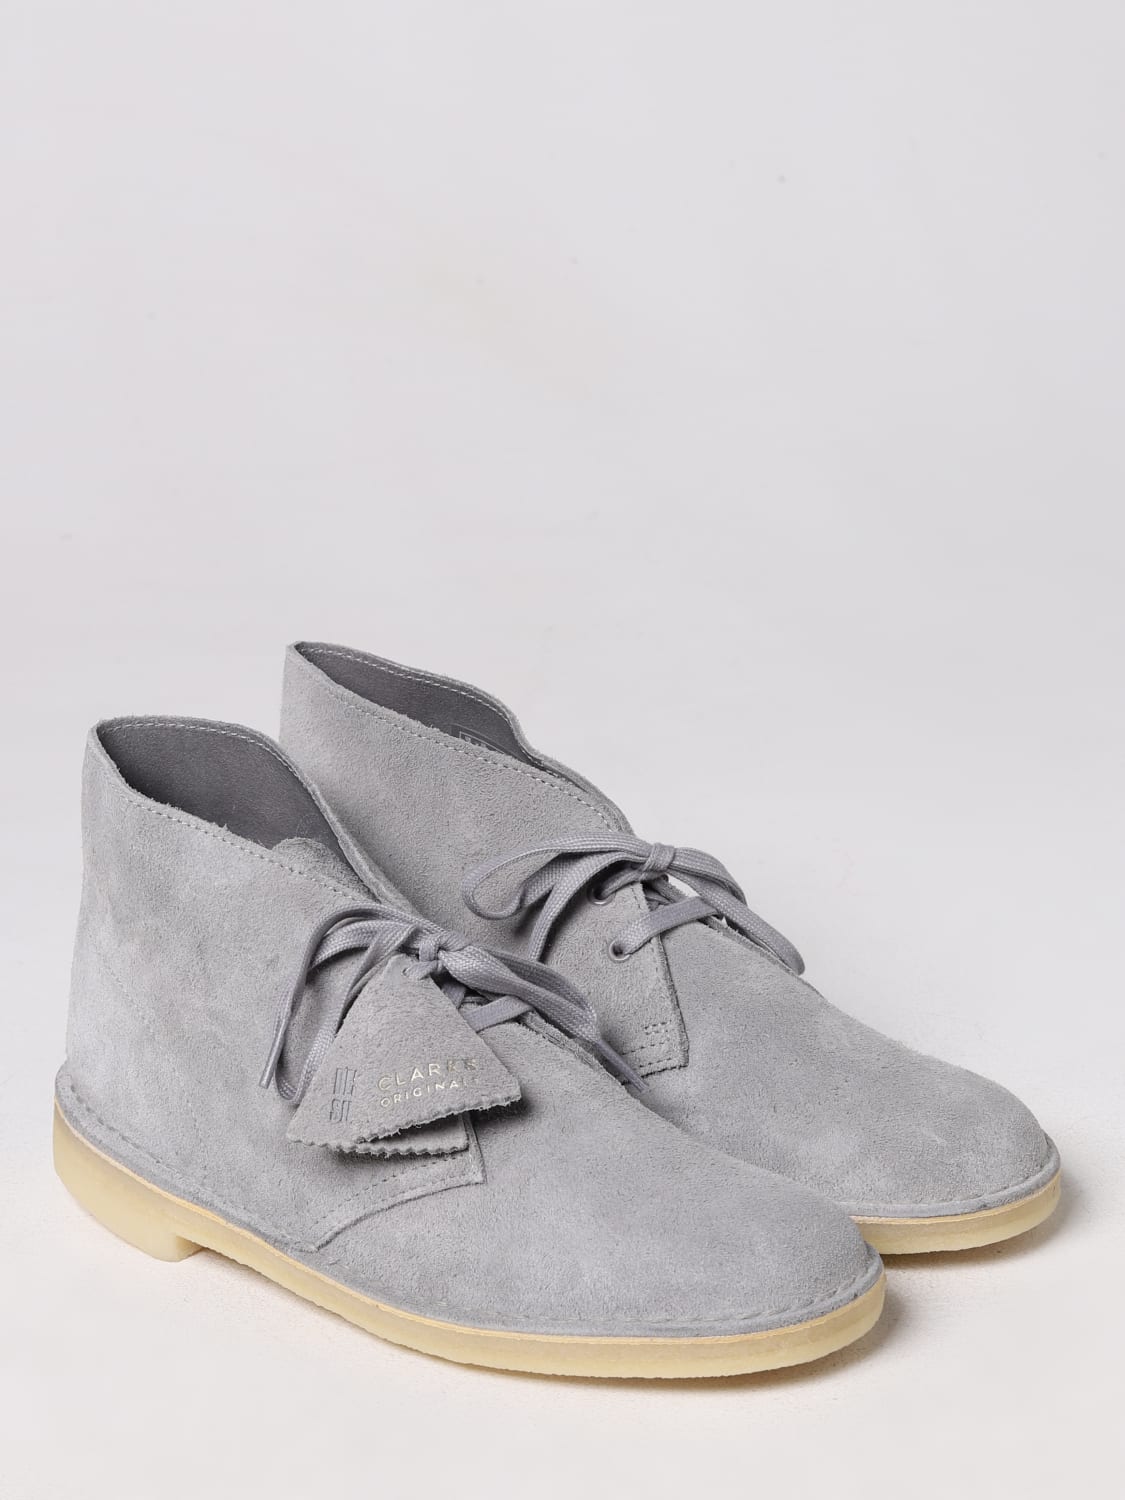 ORIGINALS: chukka boots for man - Grey | Clarks Originals chukka boots 26169941 online on GIGLIO.COM